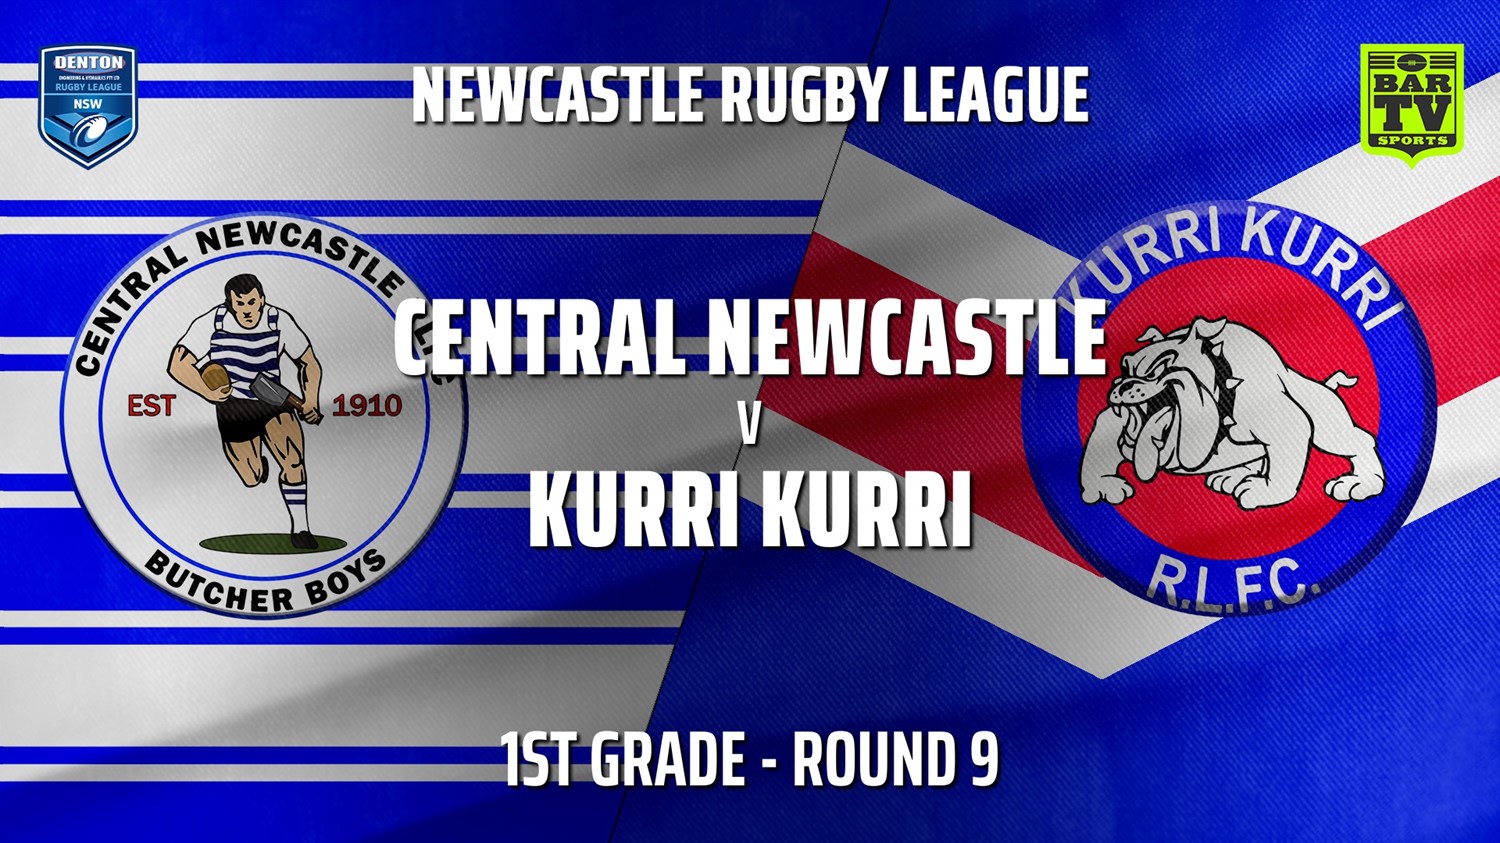 210613-Newcastle Round 9 - 1st Grade - Central Newcastle v Kurri Kurri Bulldogs Minigame Slate Image